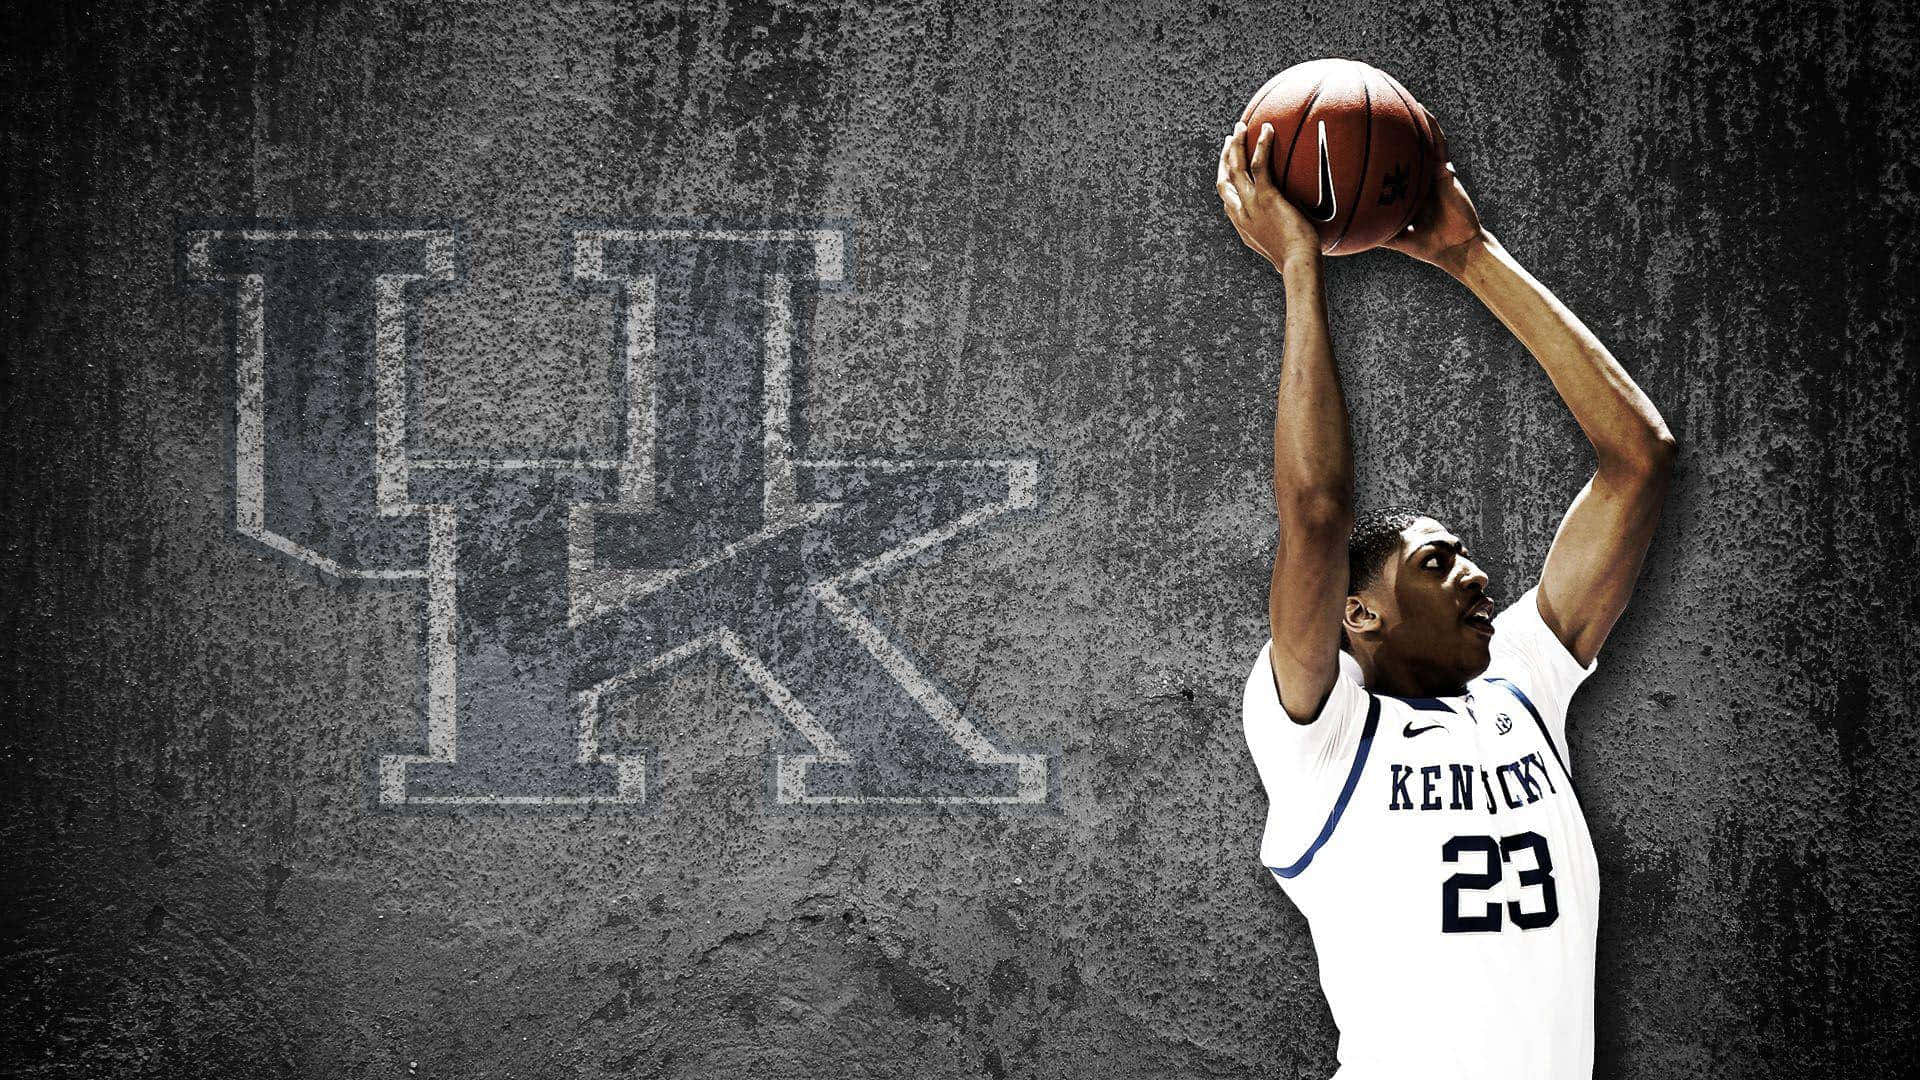 Kentuckywildcats-basketbollspelare I Aktion. Wallpaper